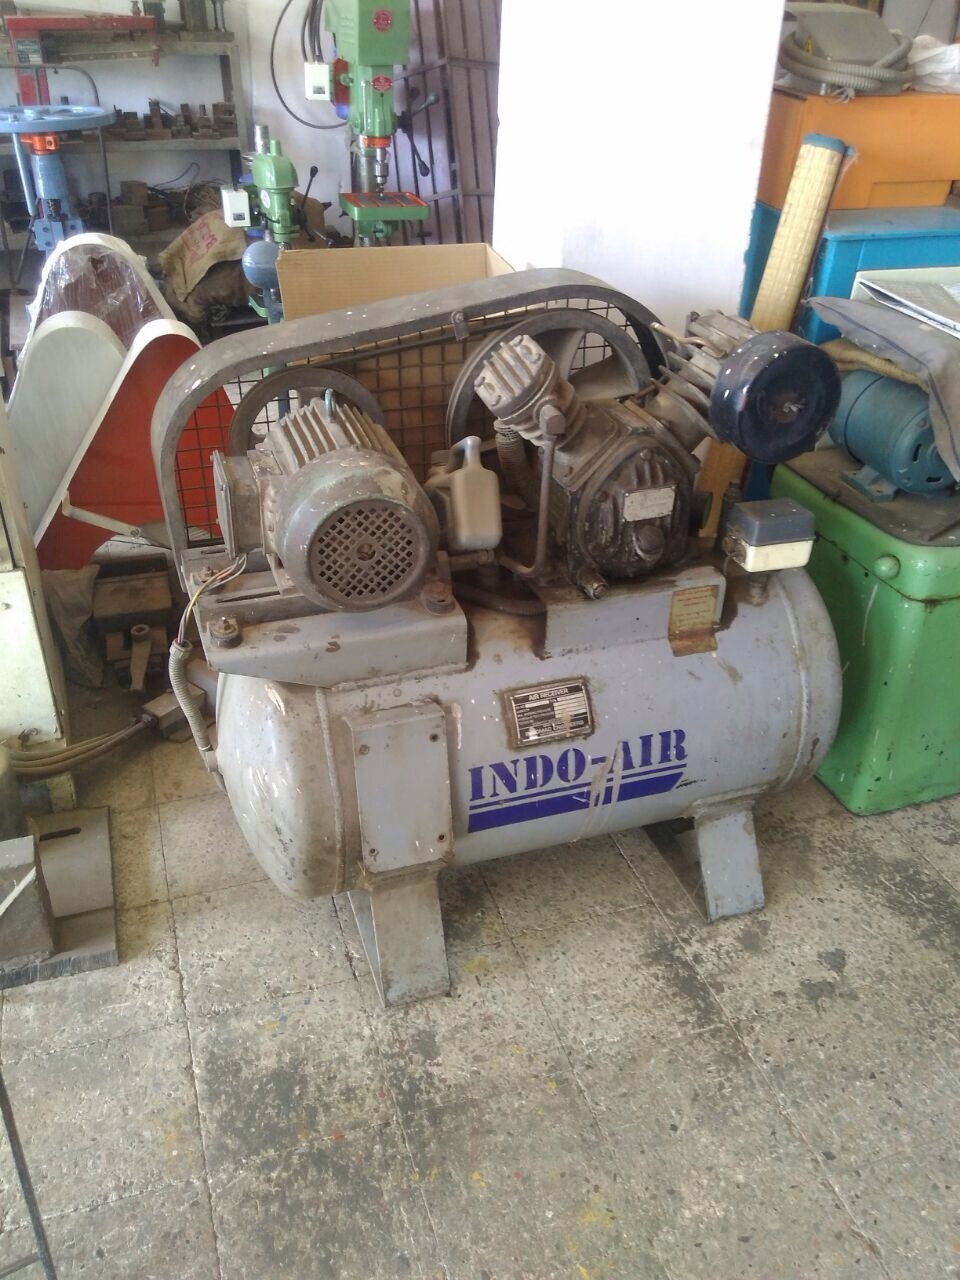 used air compressor